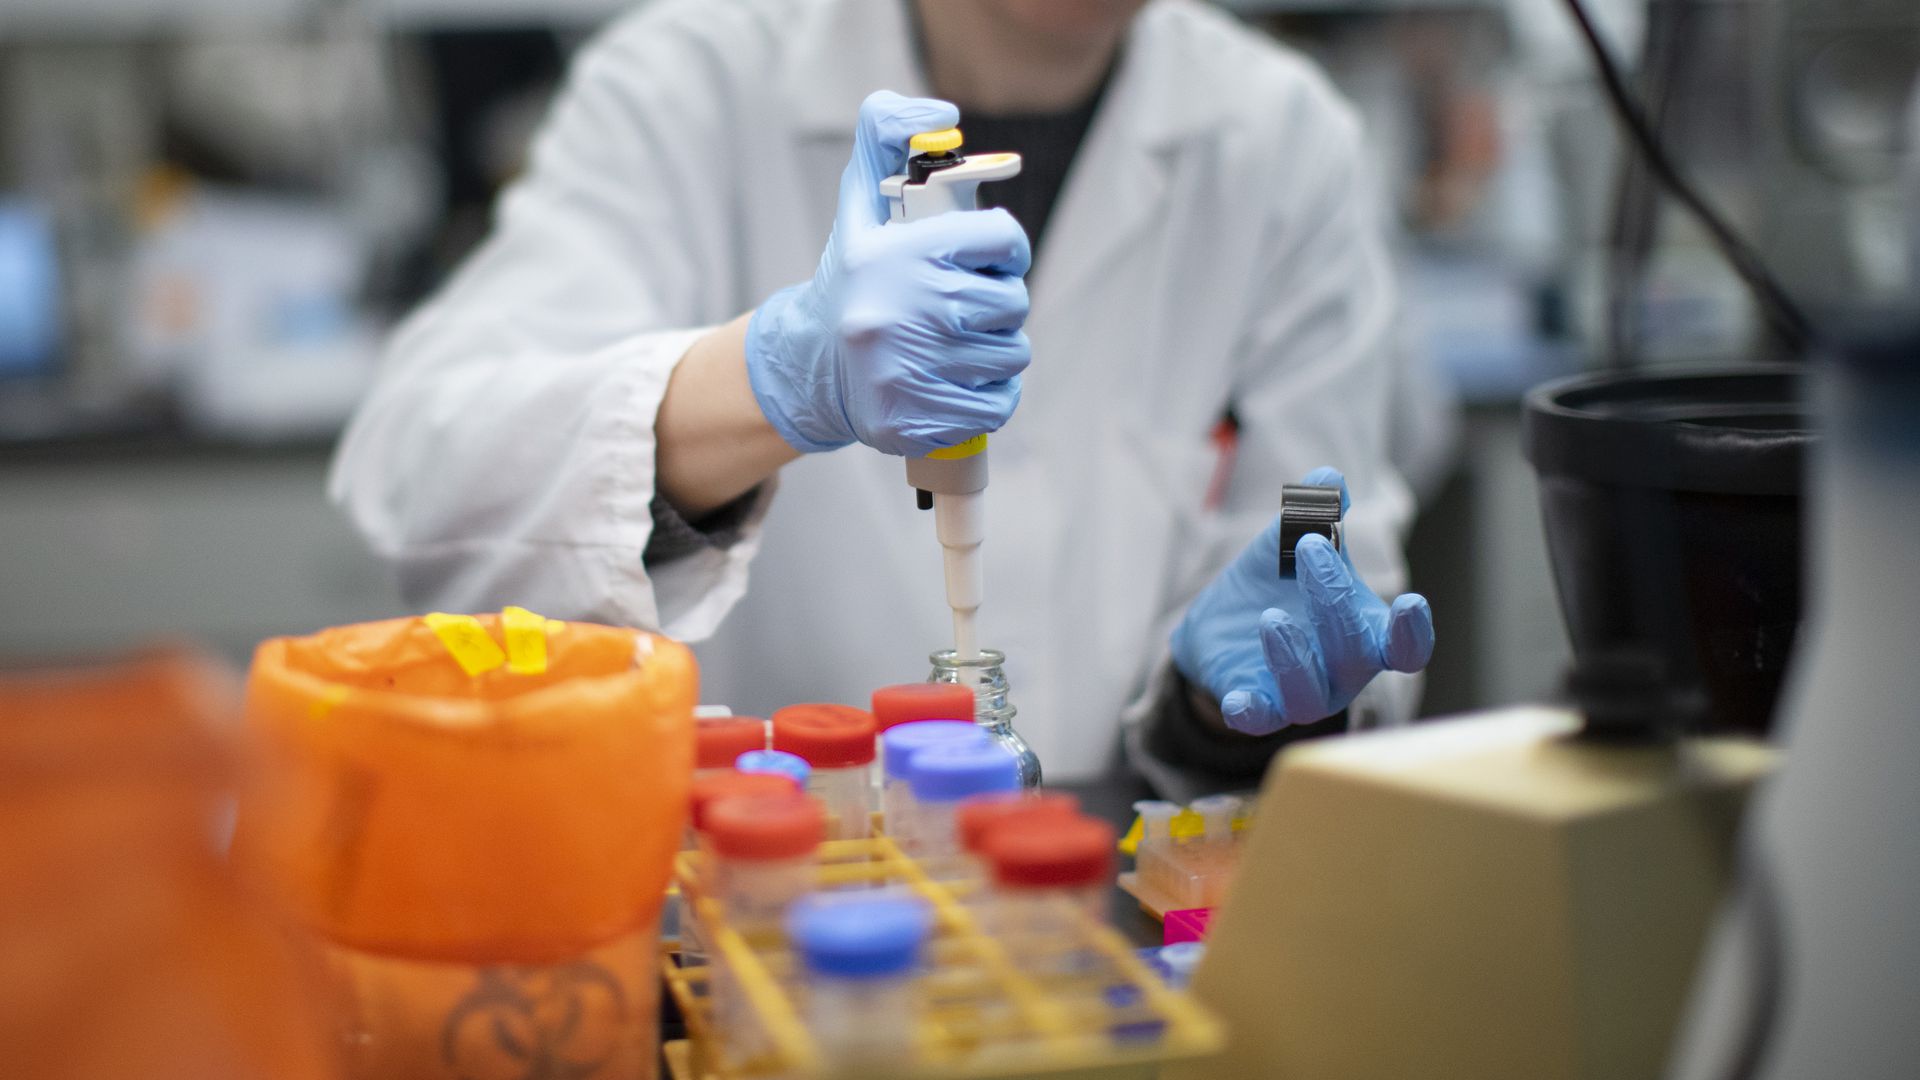 Cdc Lab For Coronavirus Test Kits May Have Been Contaminated Axios